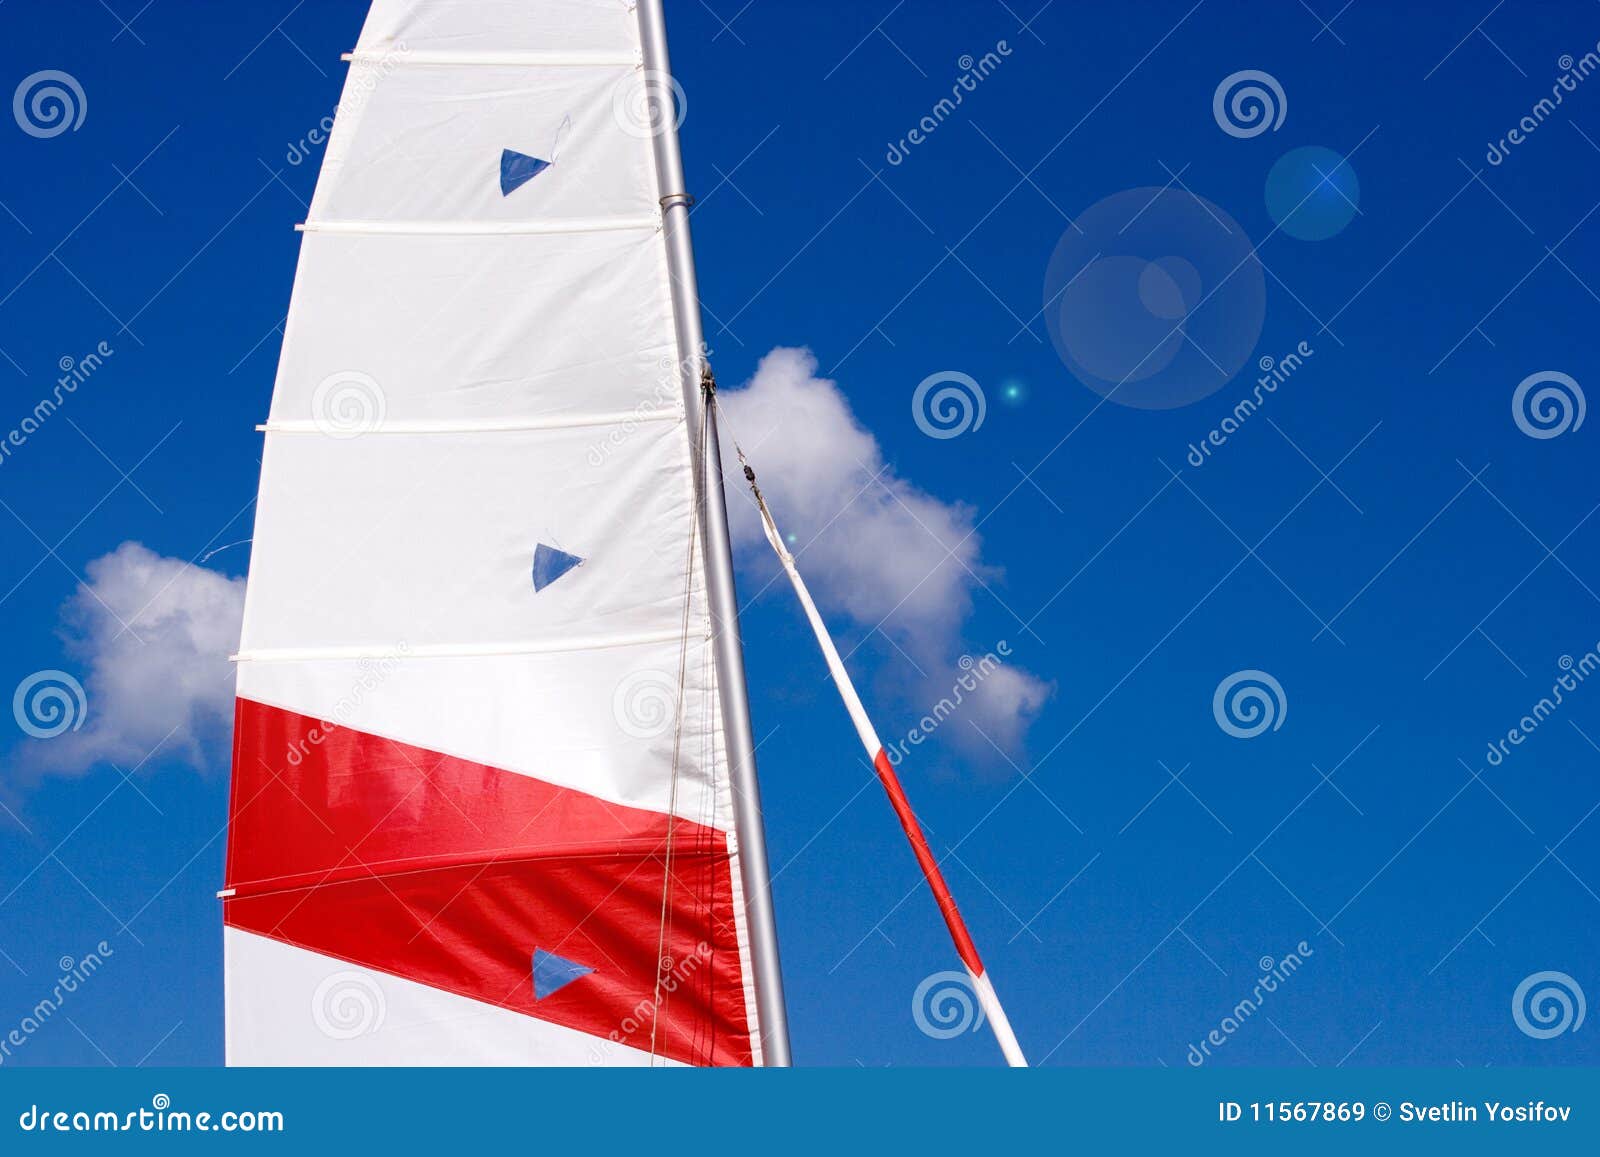 masts and sails